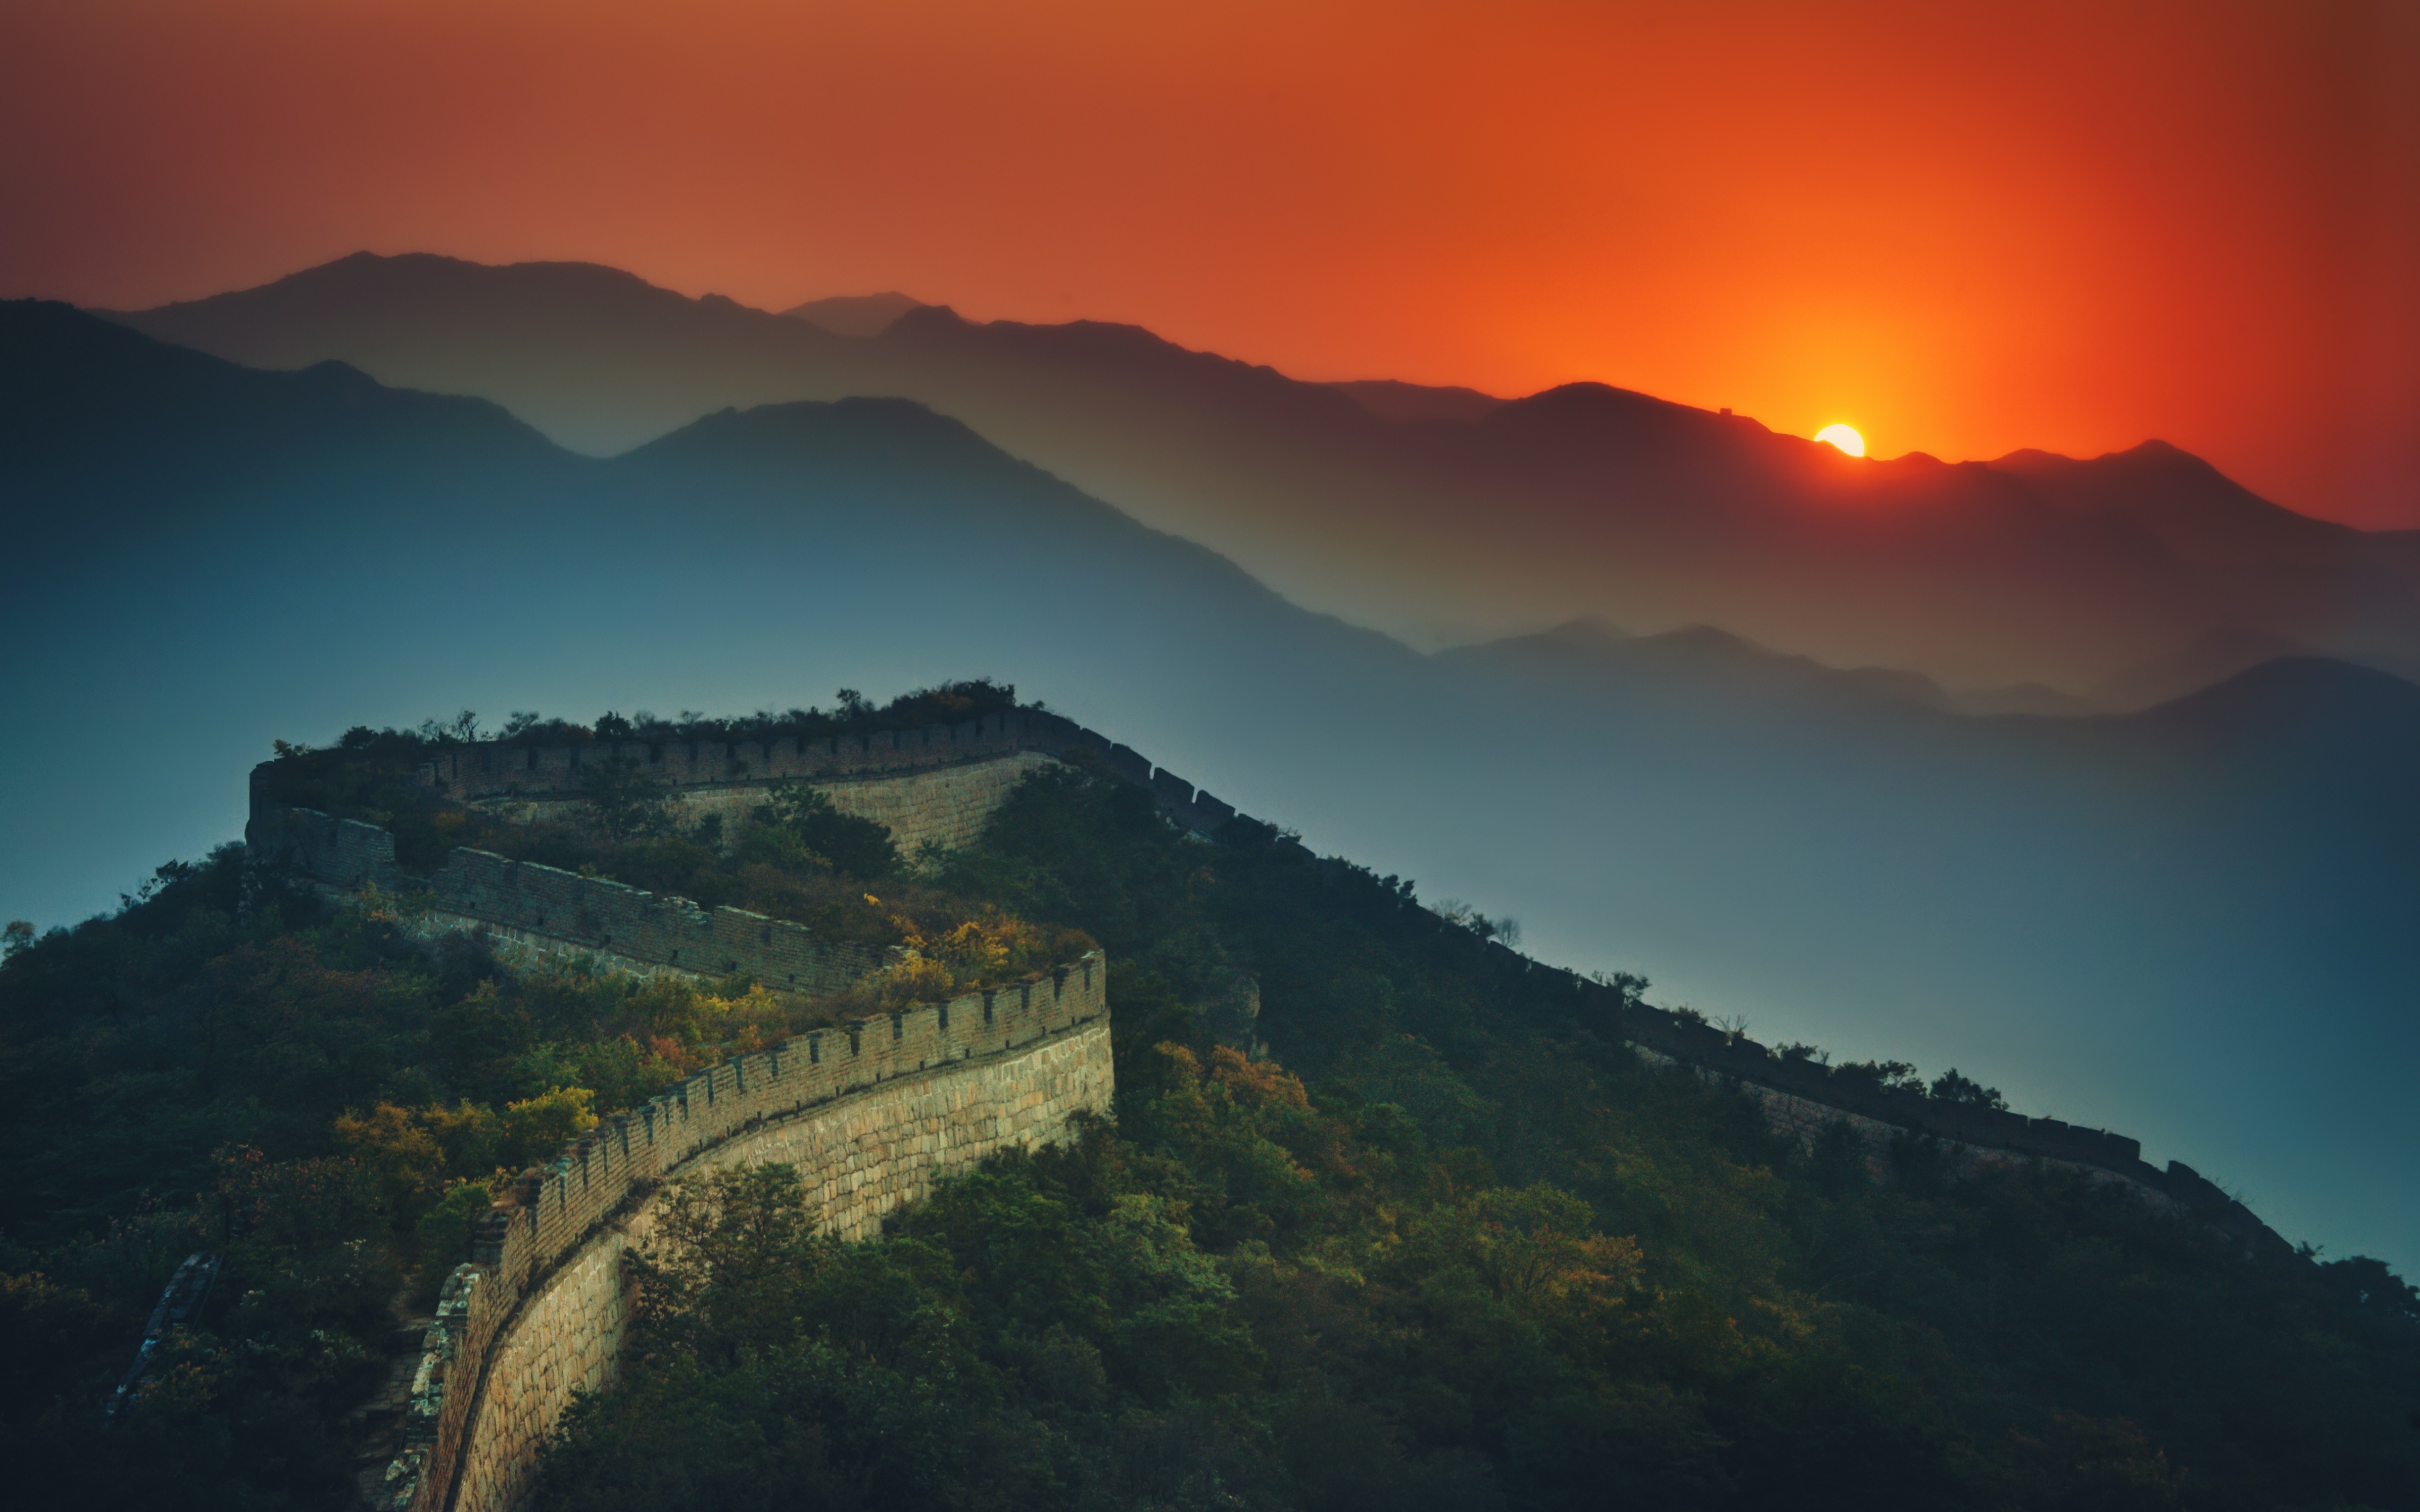 The Great Wall Of China 5k Retina Ultra HD Wallpaper And